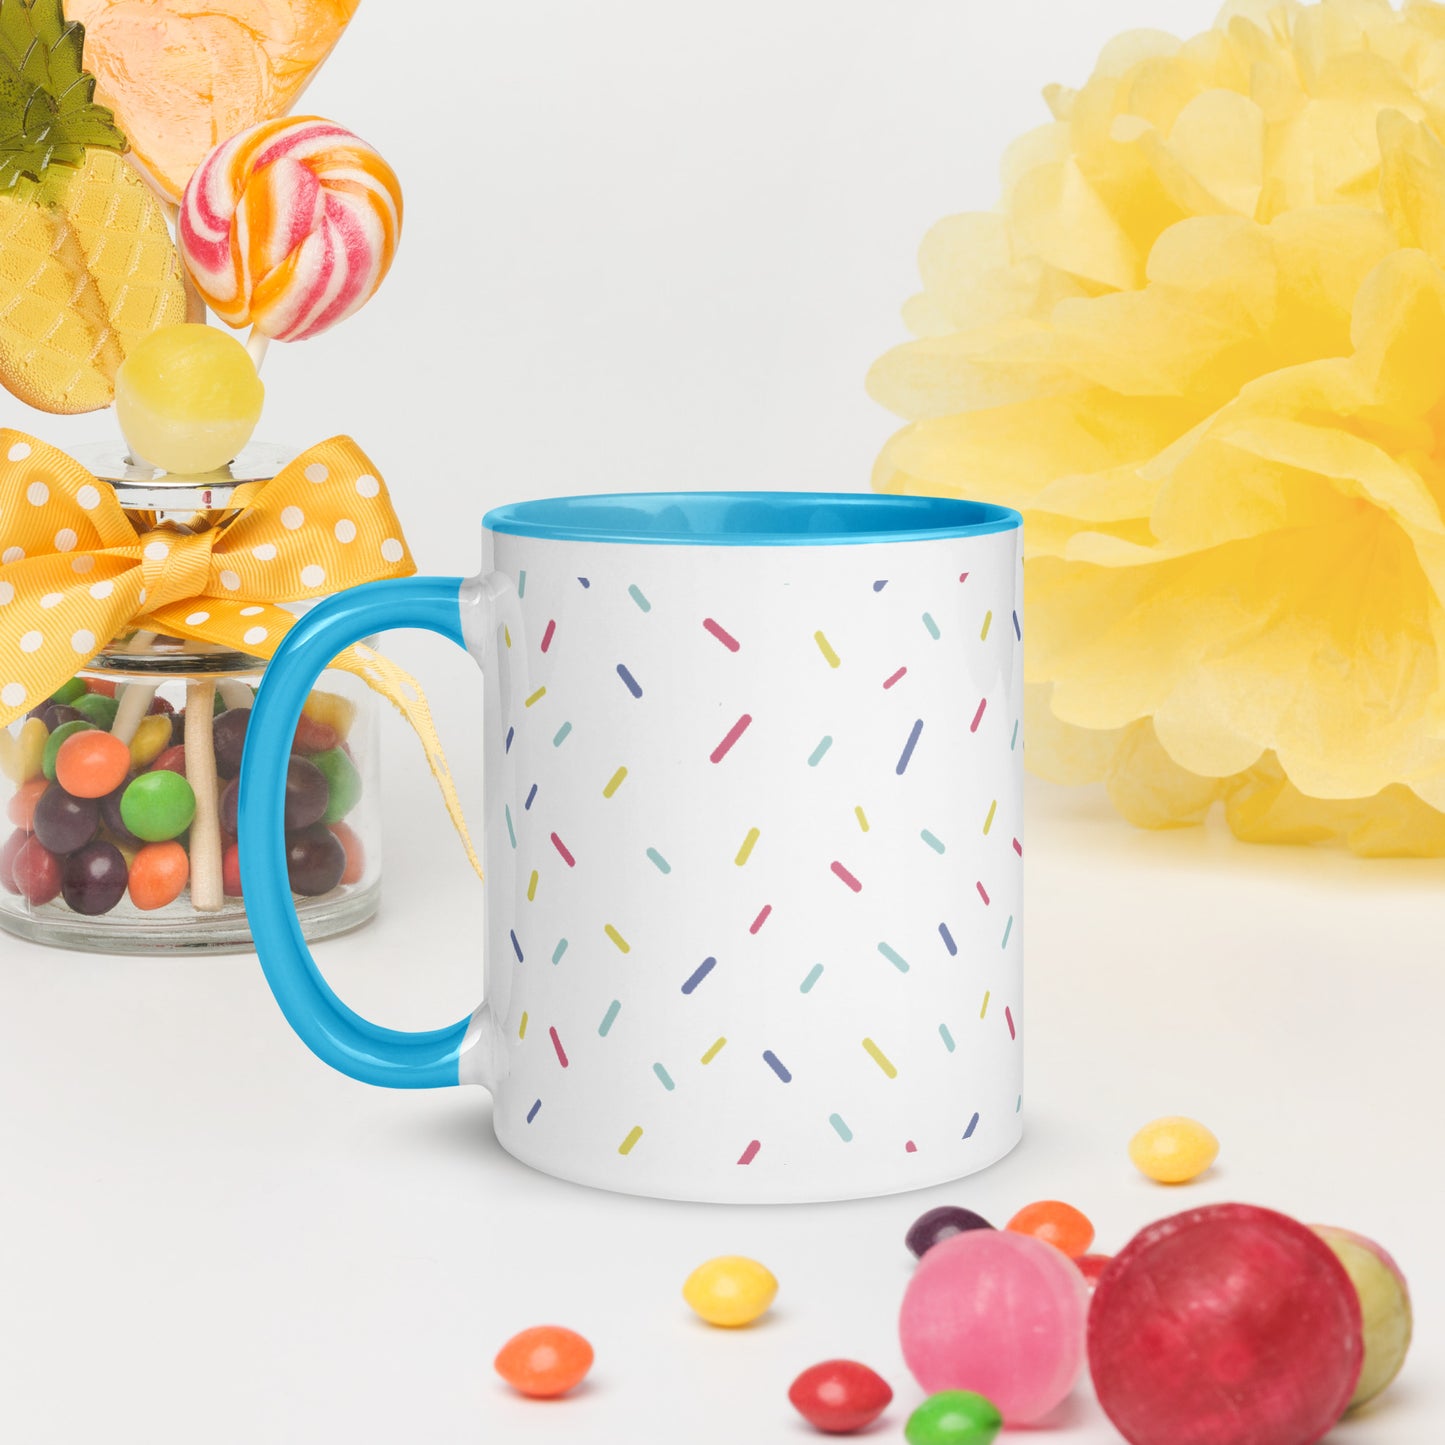 Sprinkles - Ceramic Mug with Color Inside